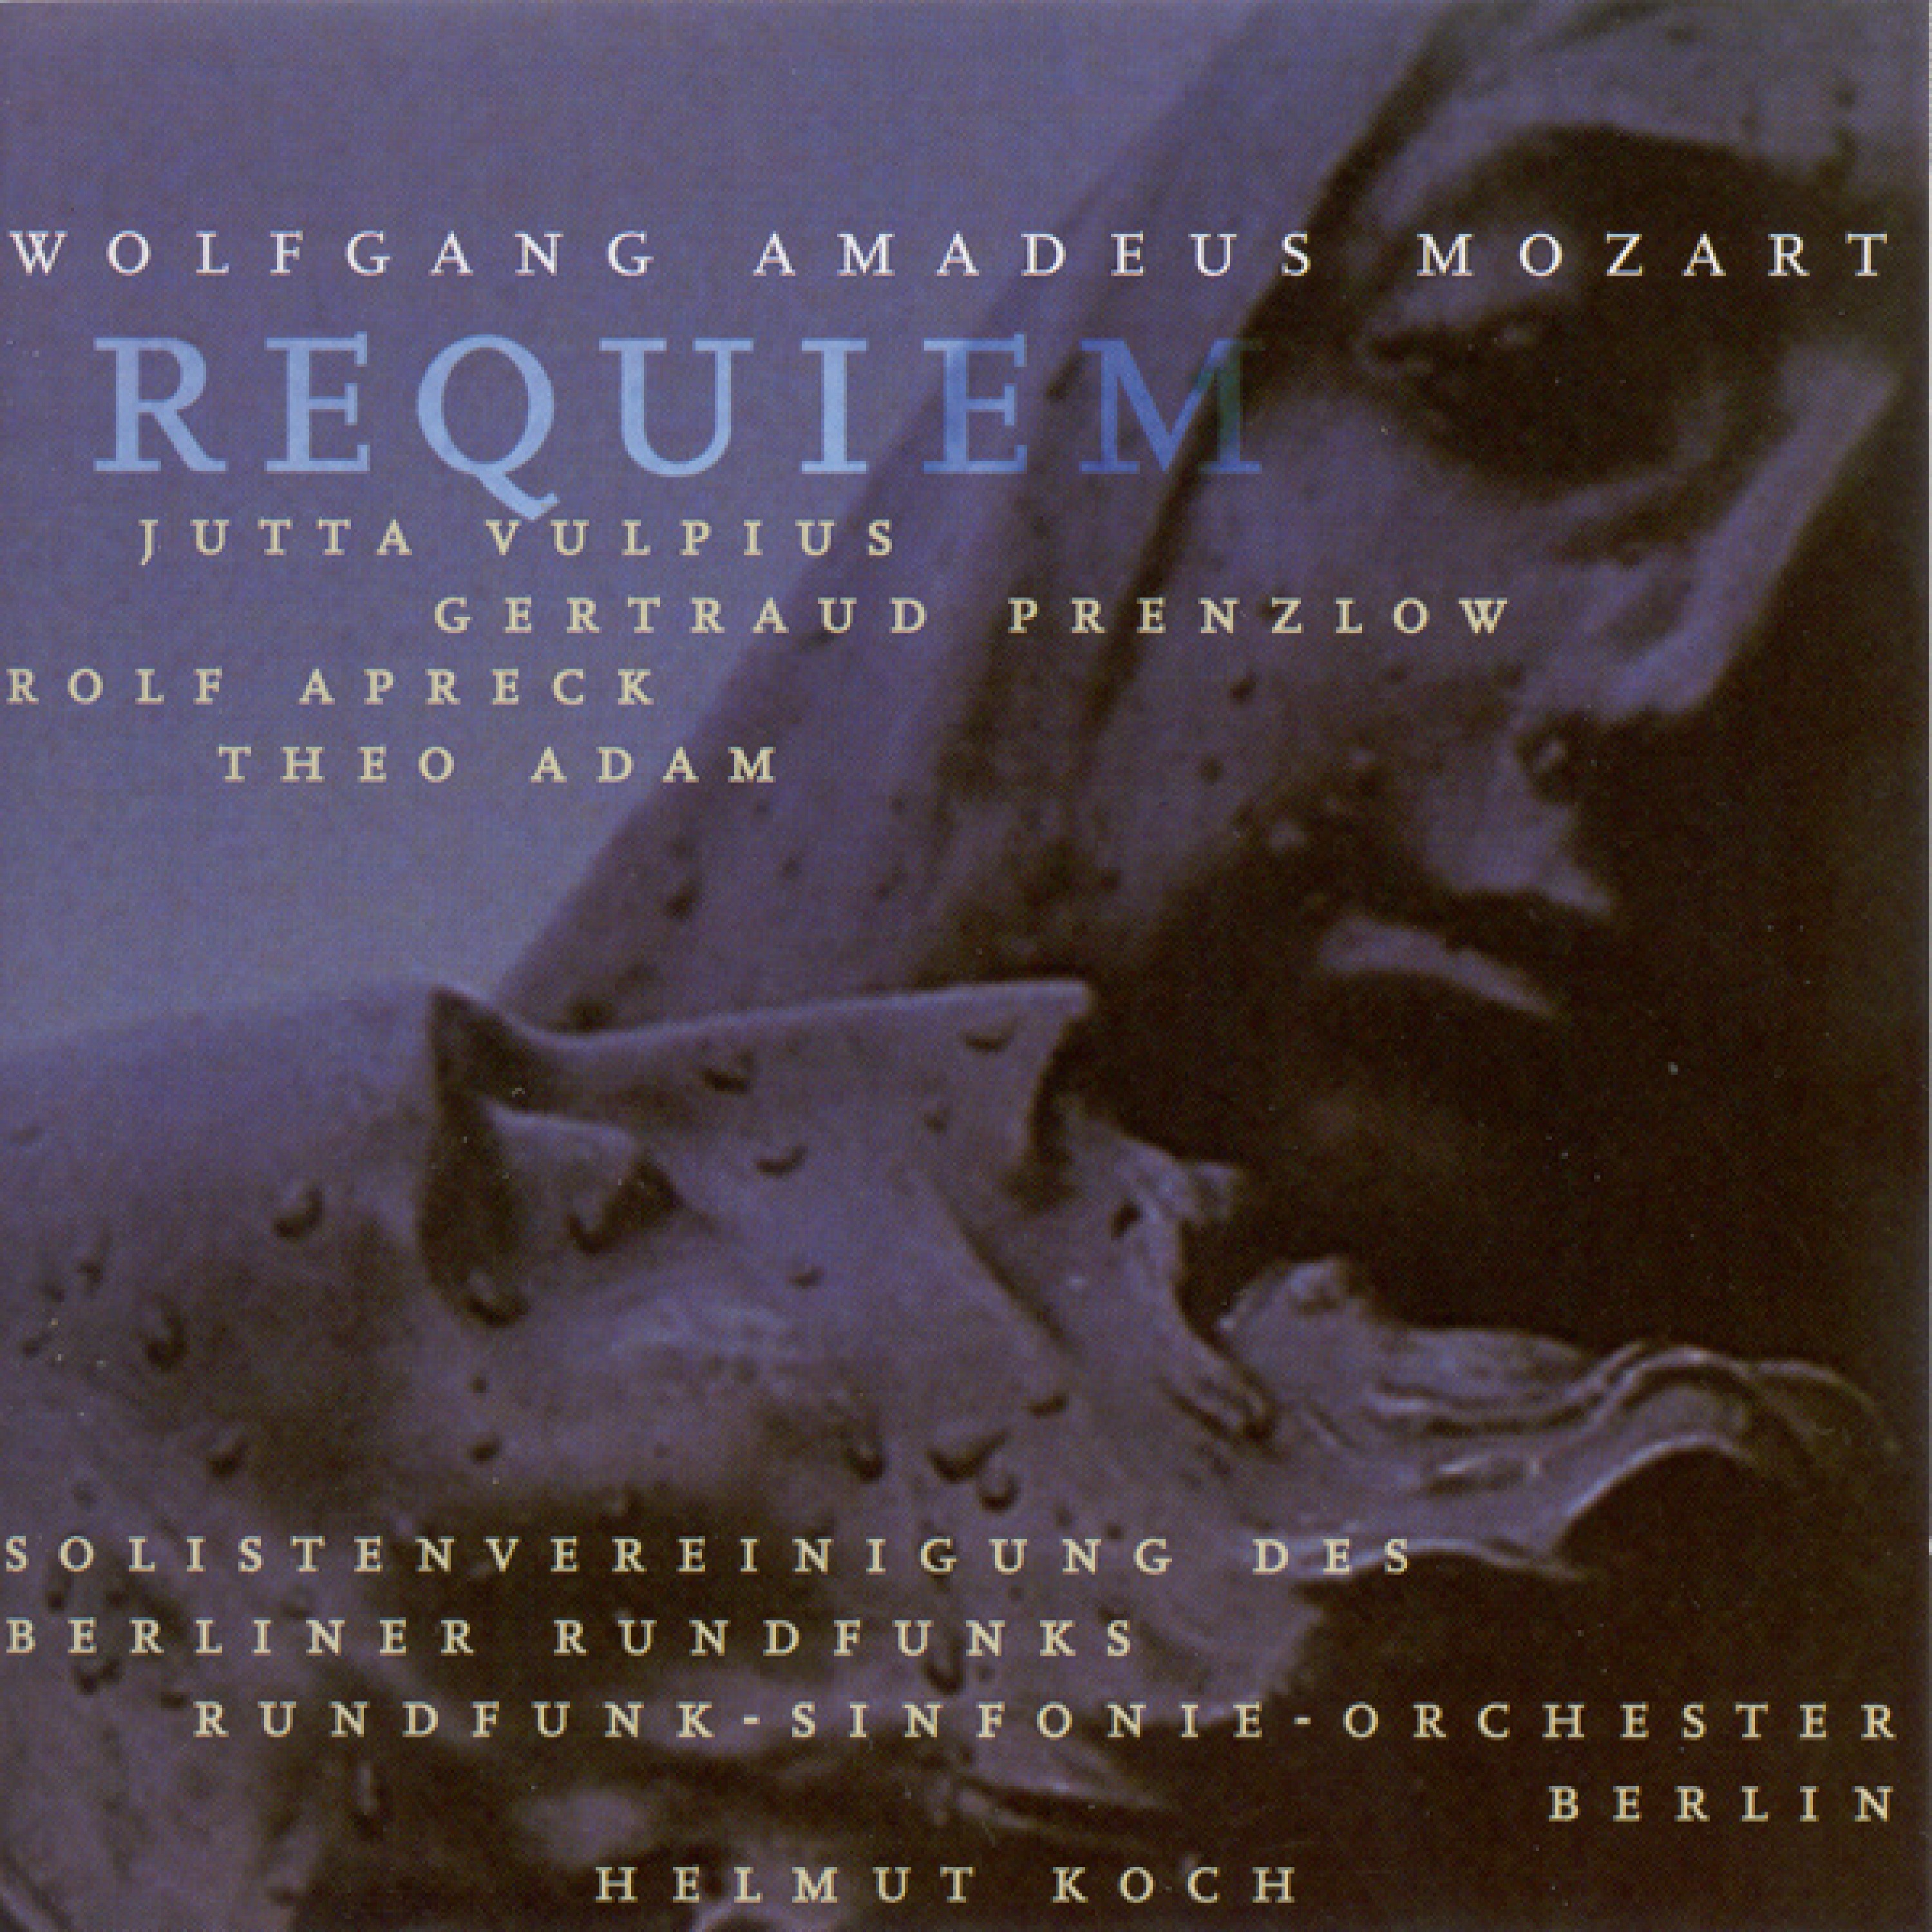 Requiem in D Minor, K. 626: Offertory No. 2, Hostias et preces